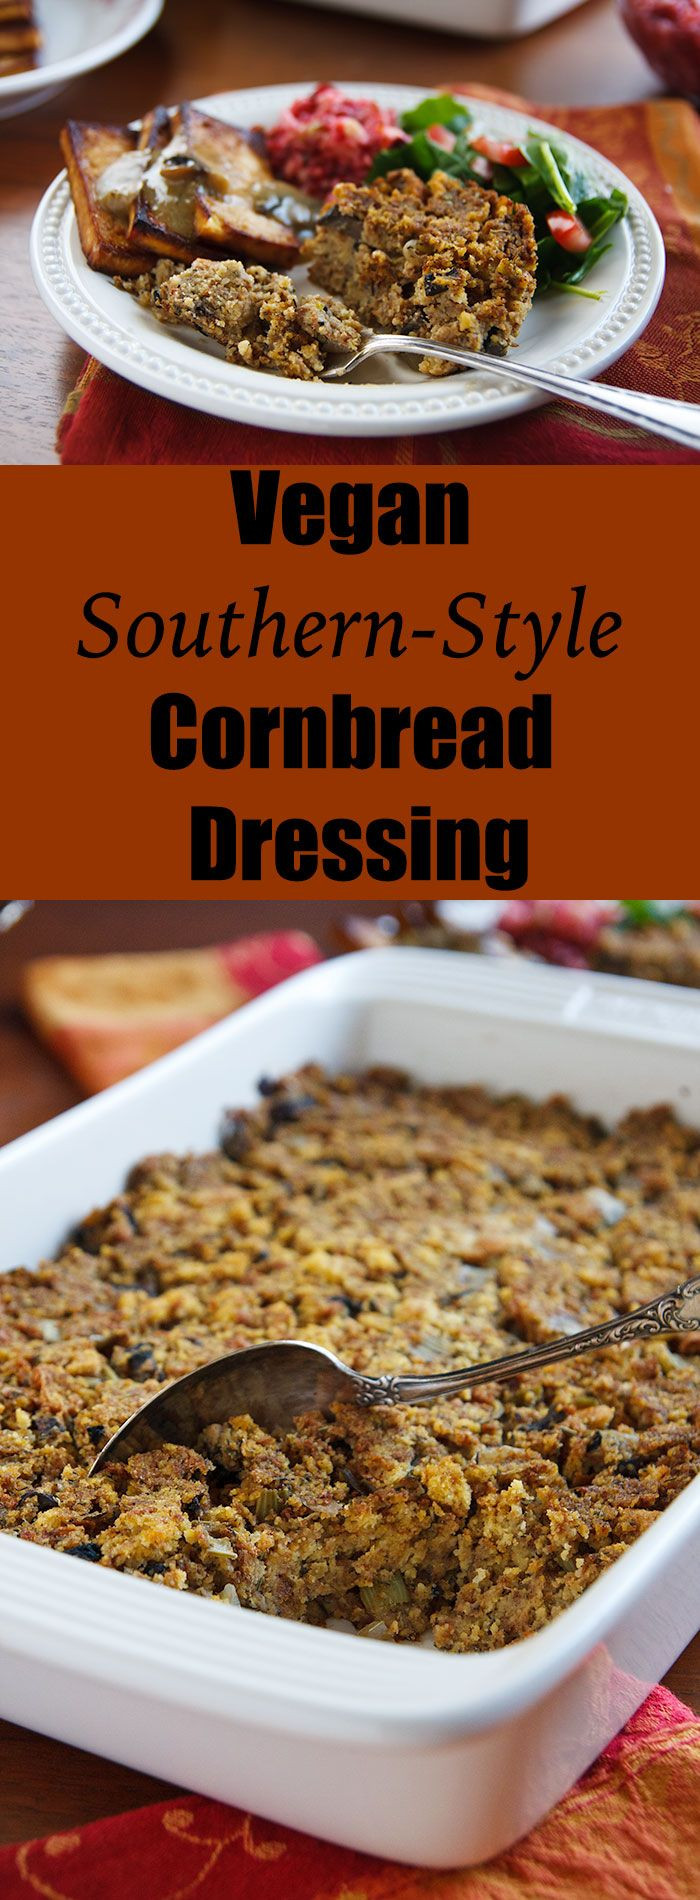 Vegan Thanksgiving Dressing Recipe
 Vegan Southern Style Cornbread Dressing Recipe